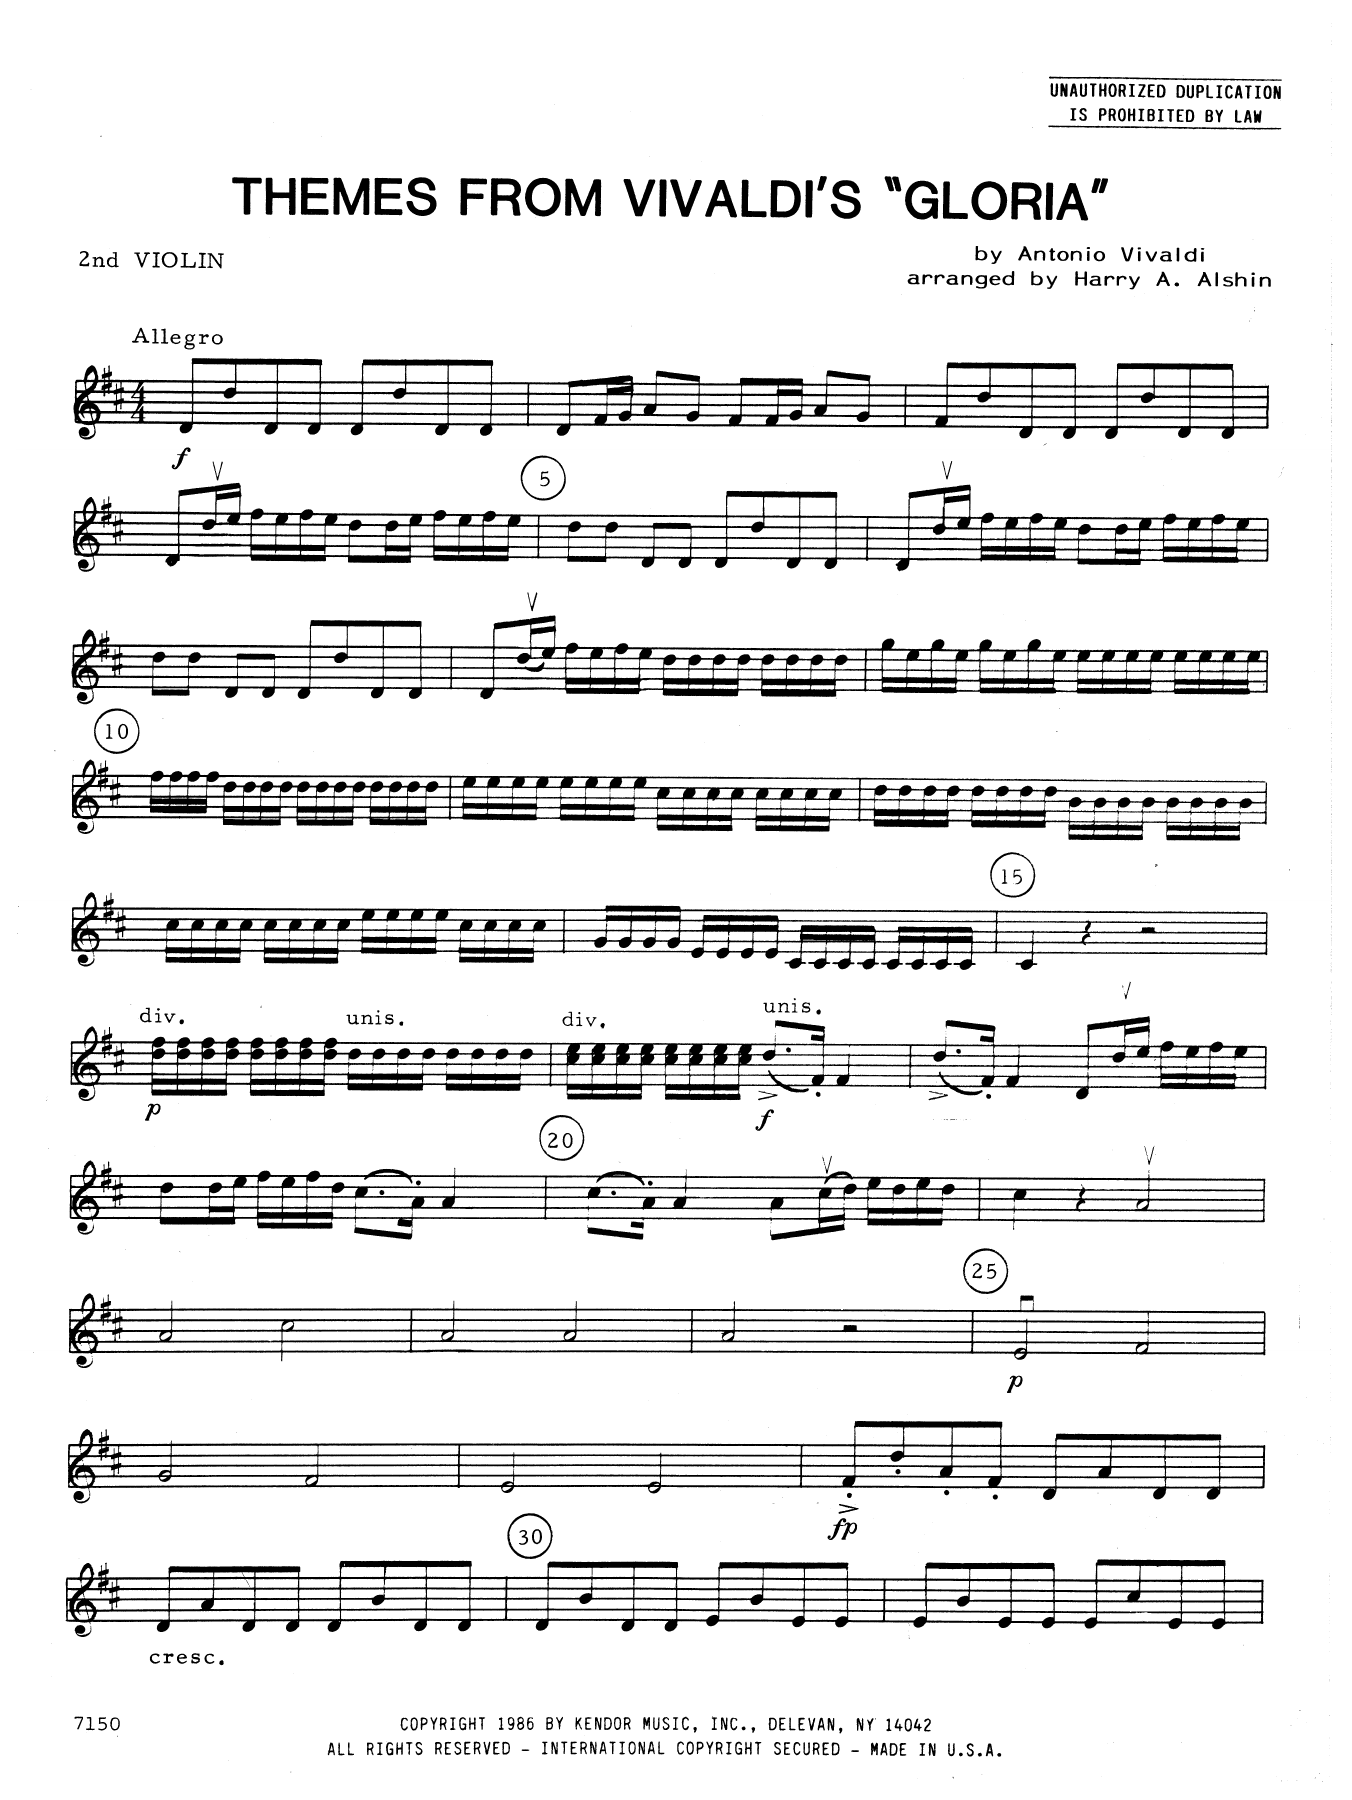 Download Alshin Themes From Vivaldi's Gloria - 2nd Viol Sheet Music